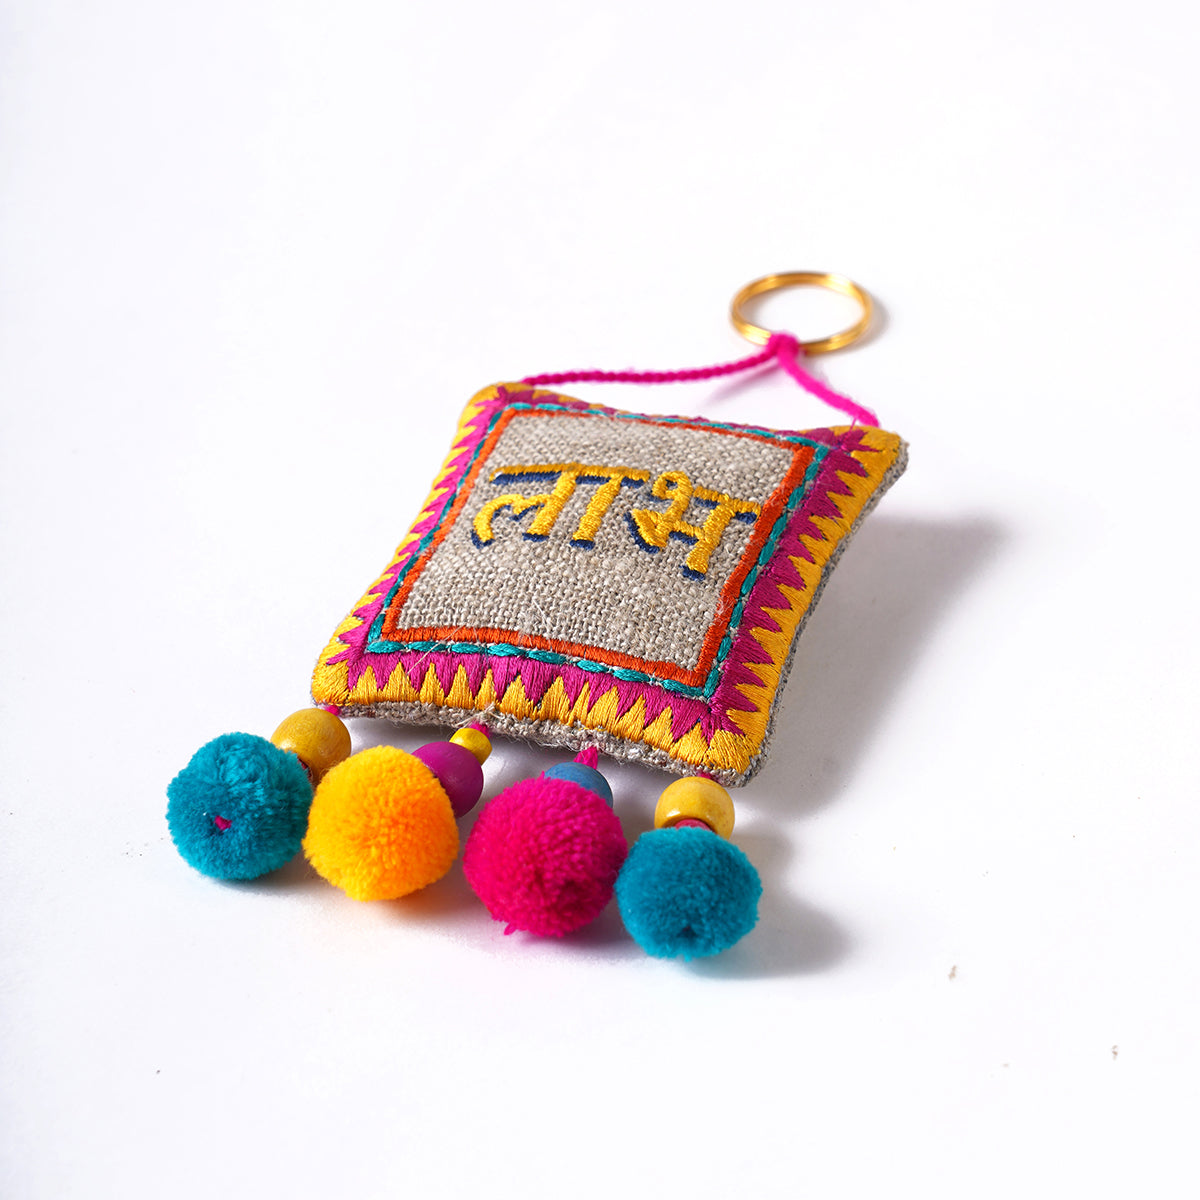 Pair of SHUBH-LABH tassels, Multicolor handmade auspicious charm, size 6" or 16 cms